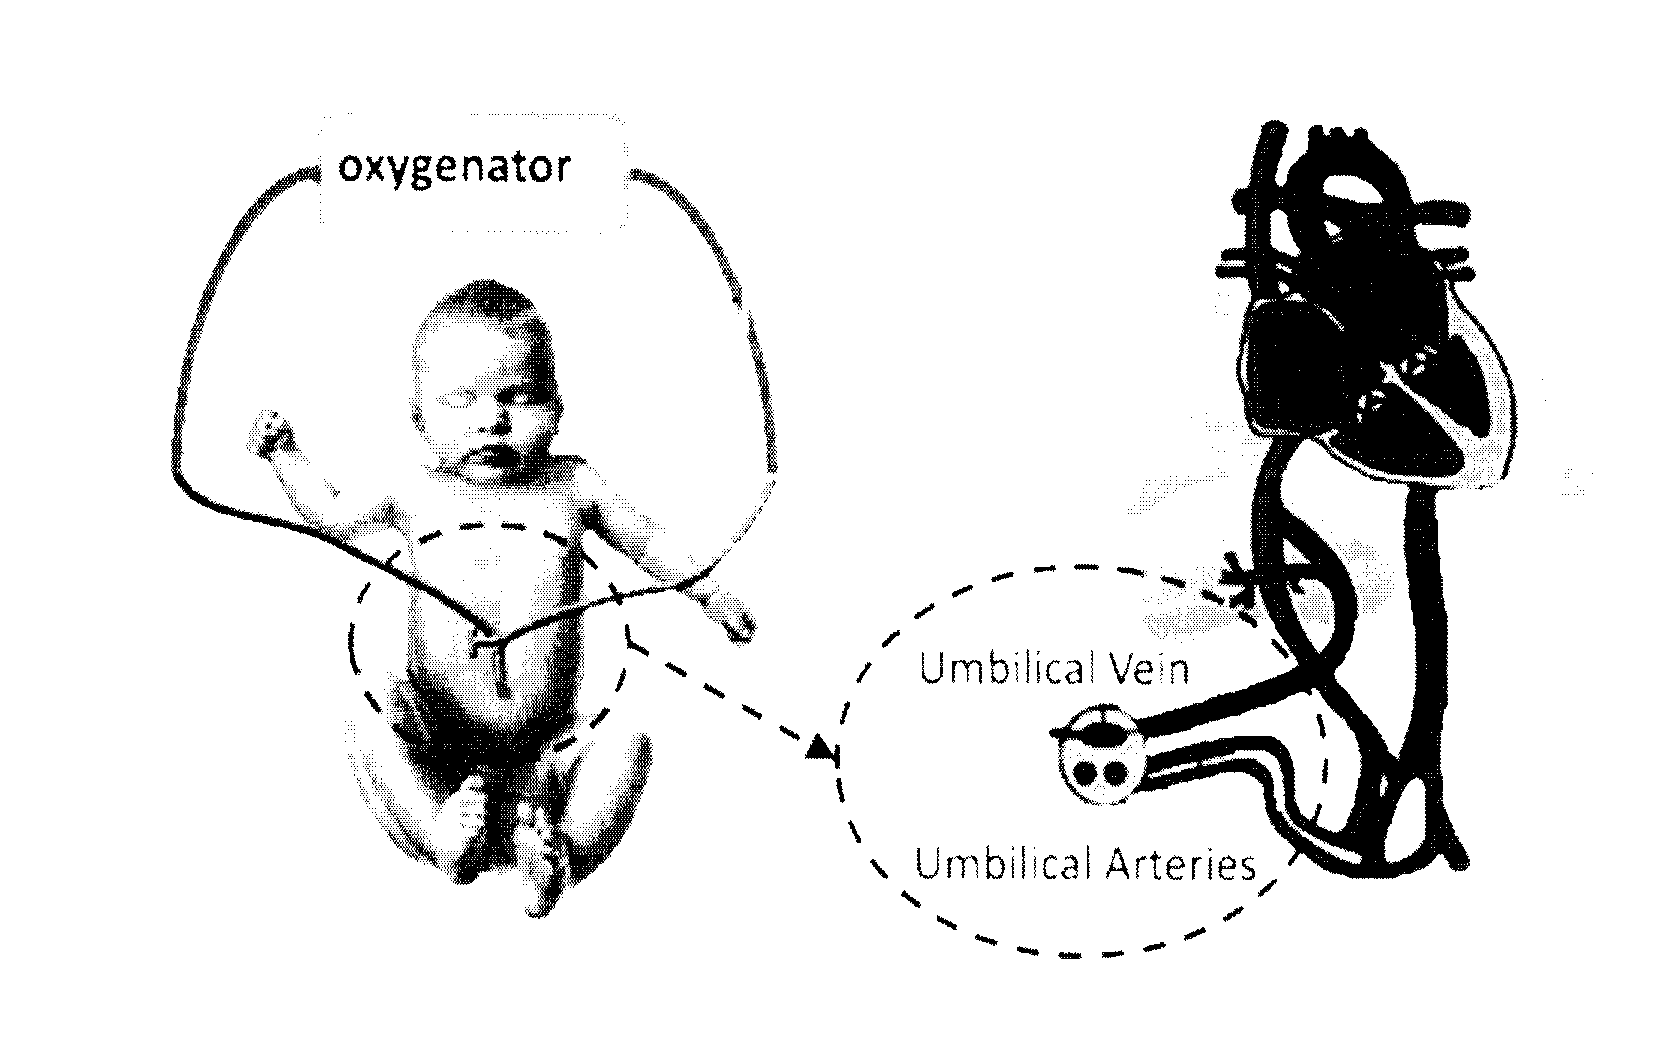 Artificial placenta